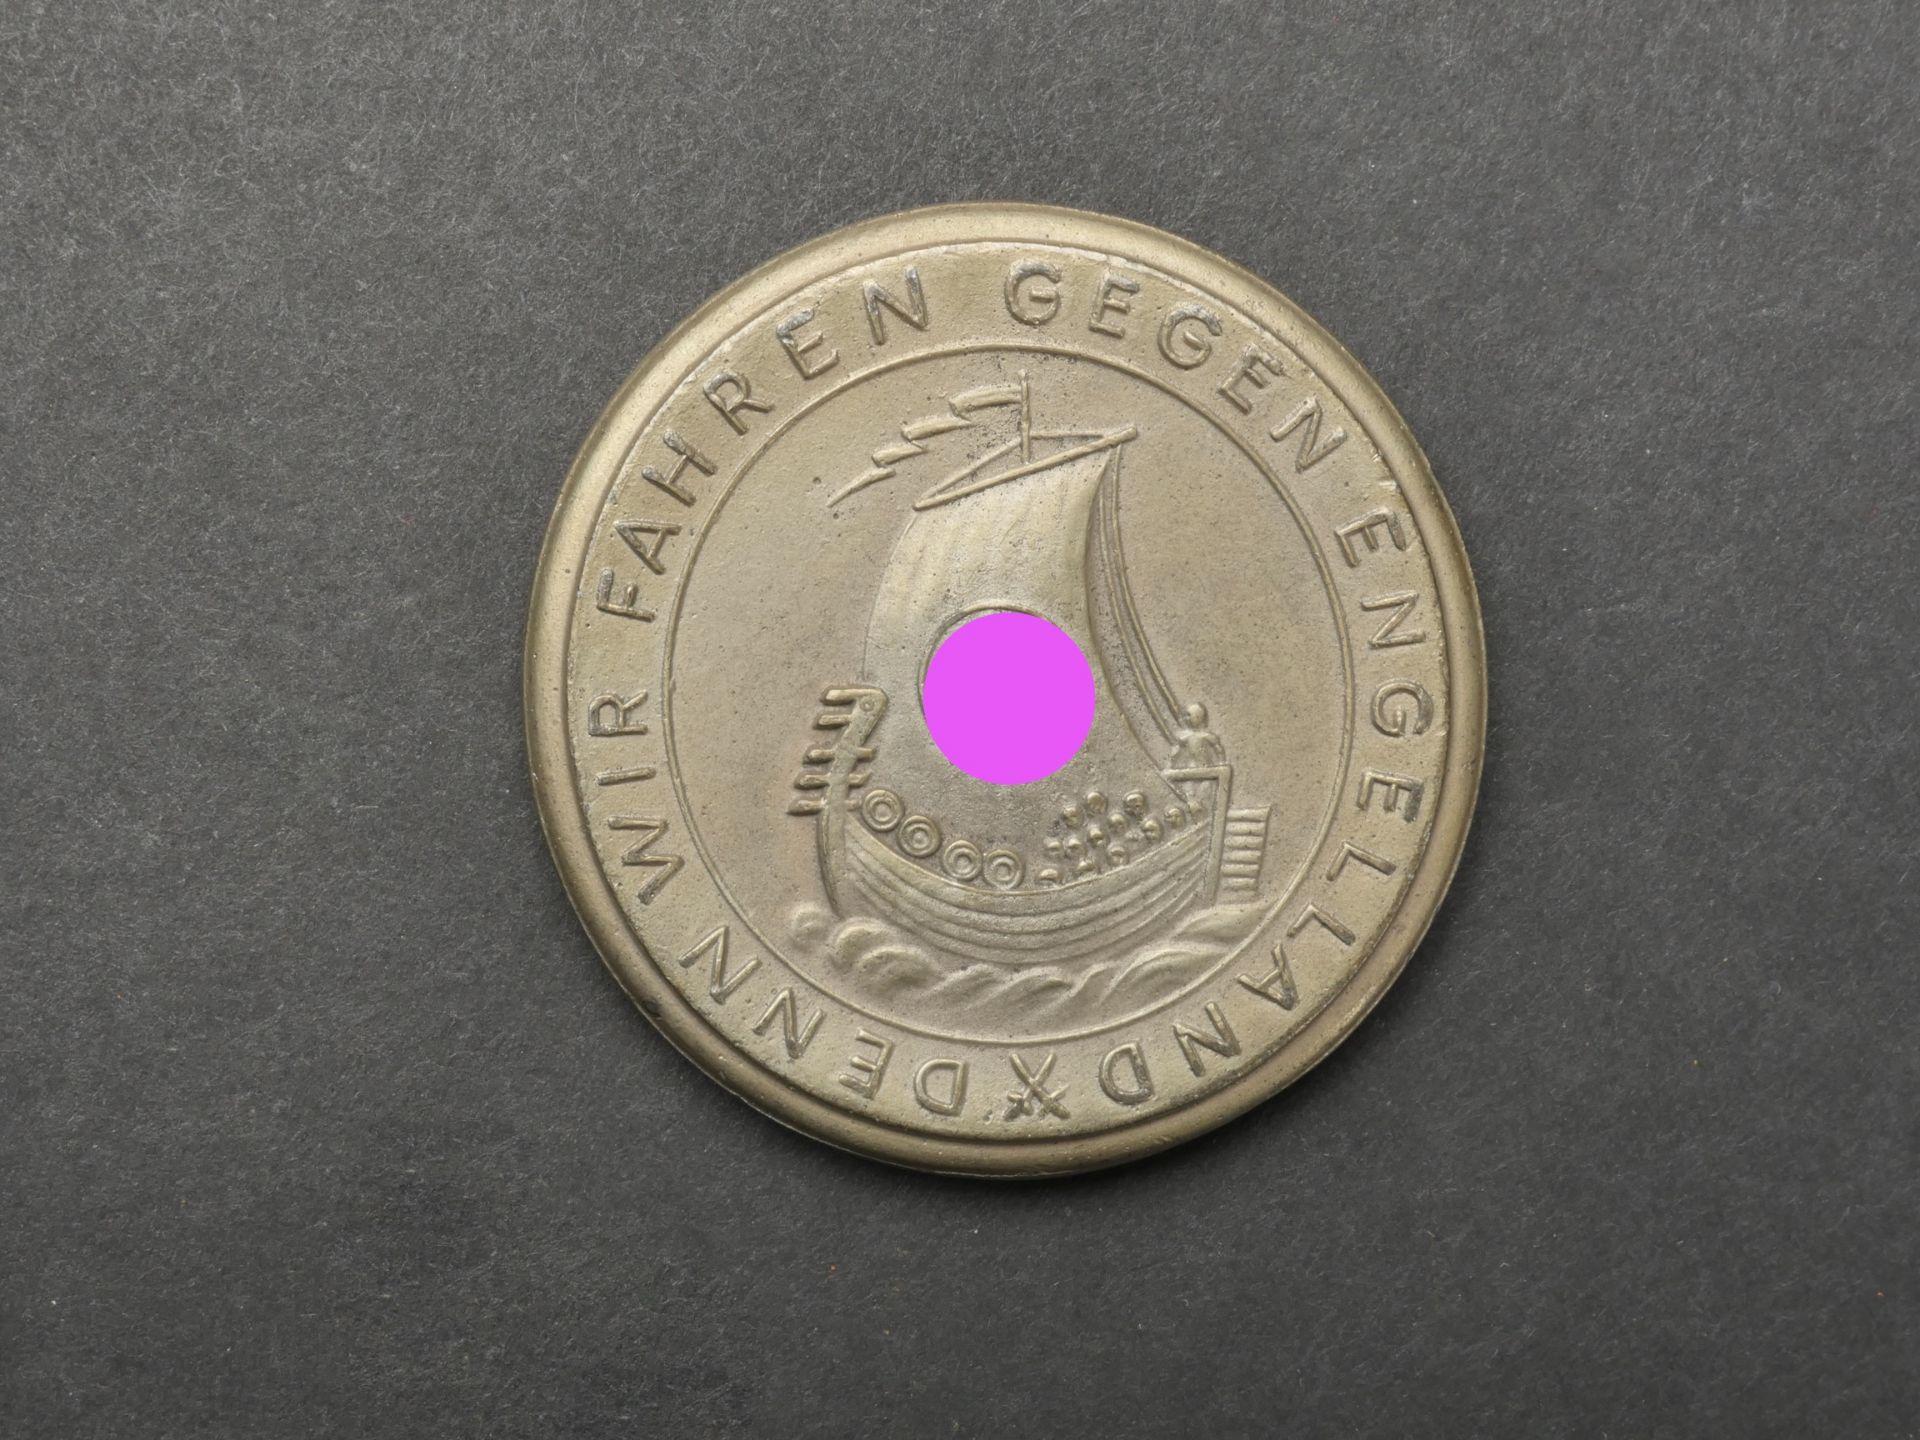 Medaille commemorative Norvege. Norway commemorative medal. - Bild 3 aus 3